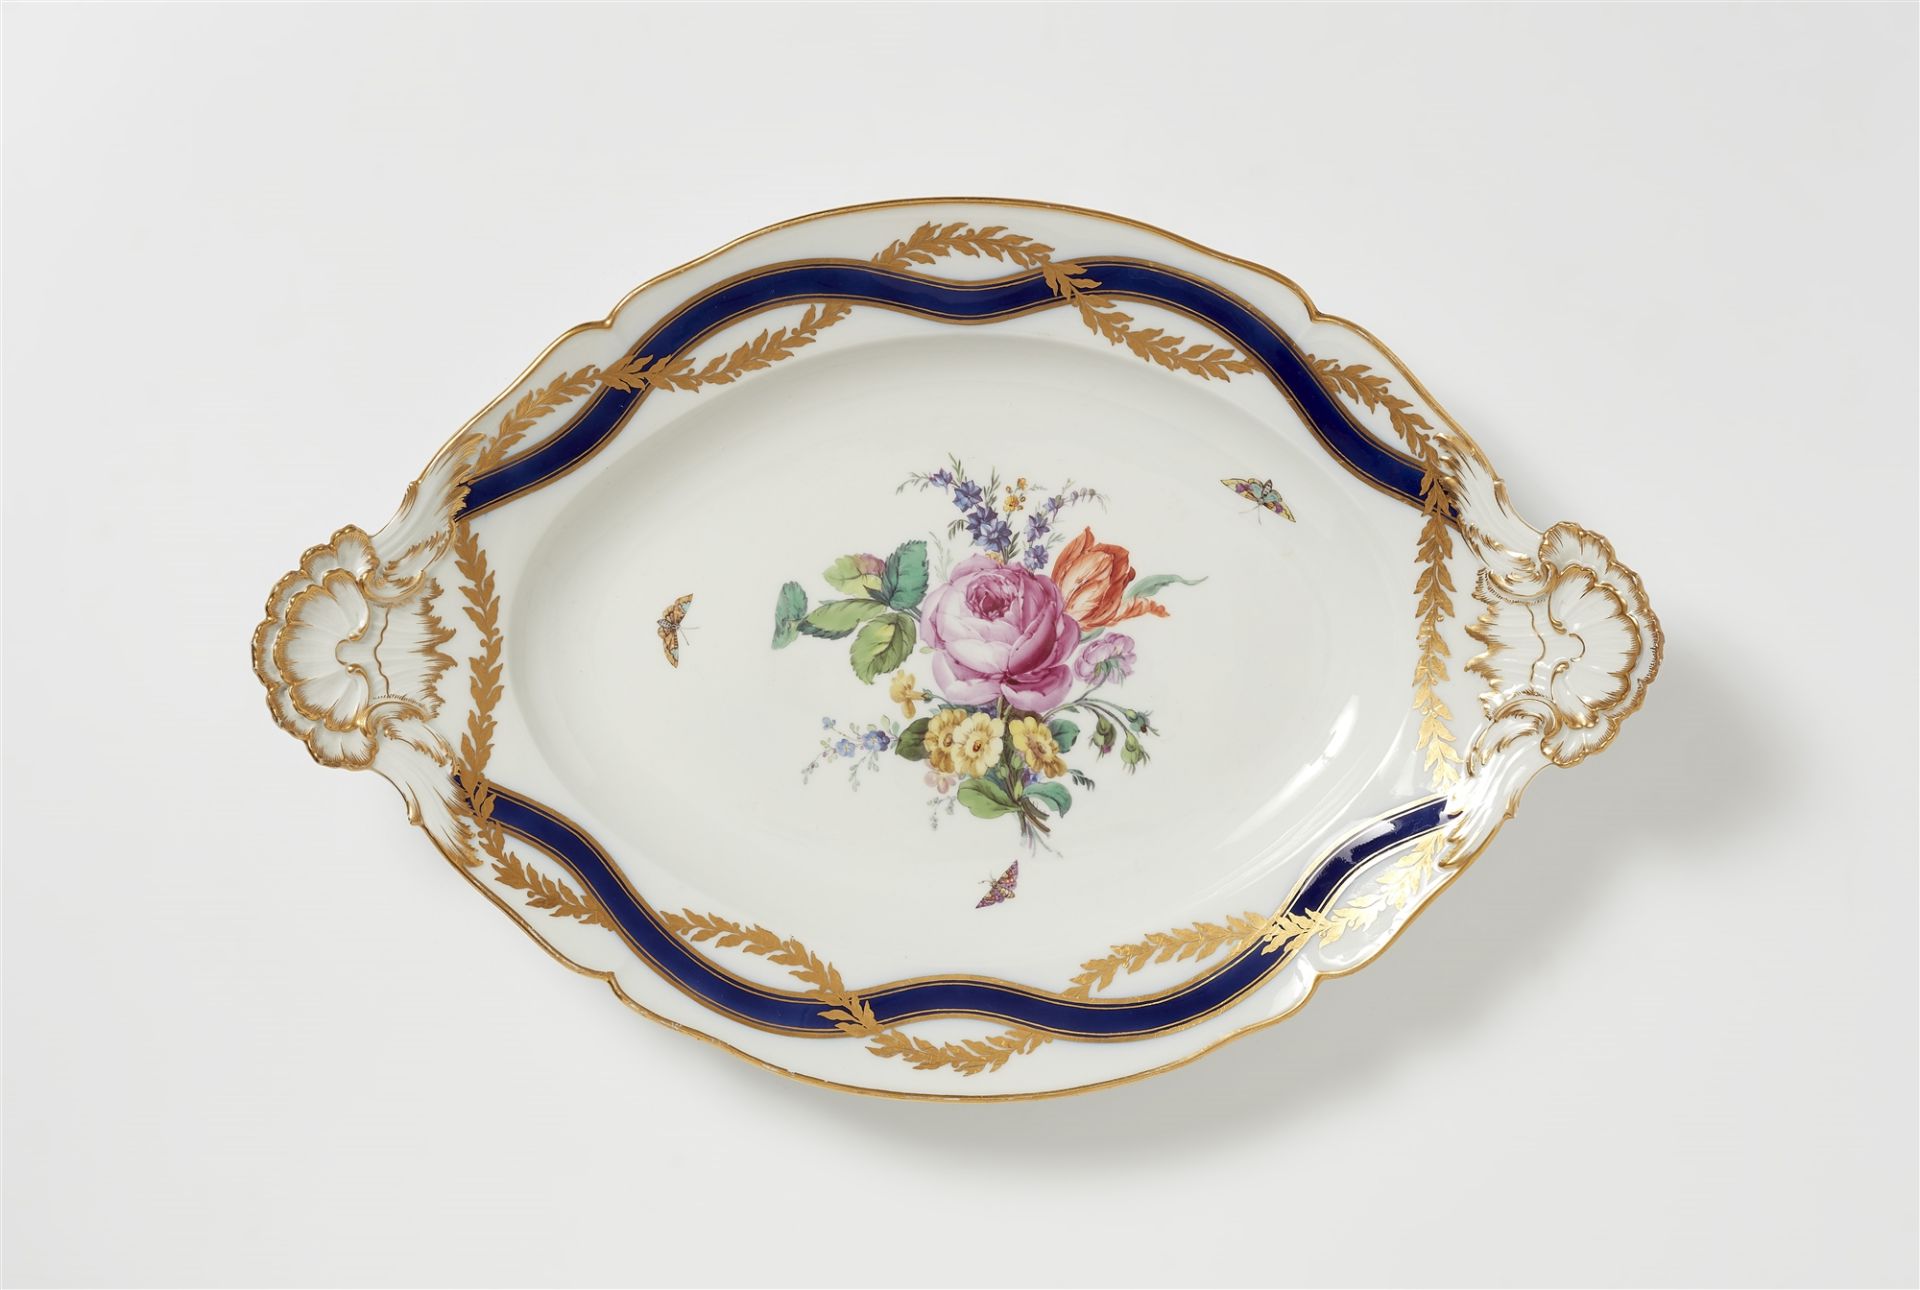 A Berlin KPM porcelain platter from the last dinner service for King Friedrich II